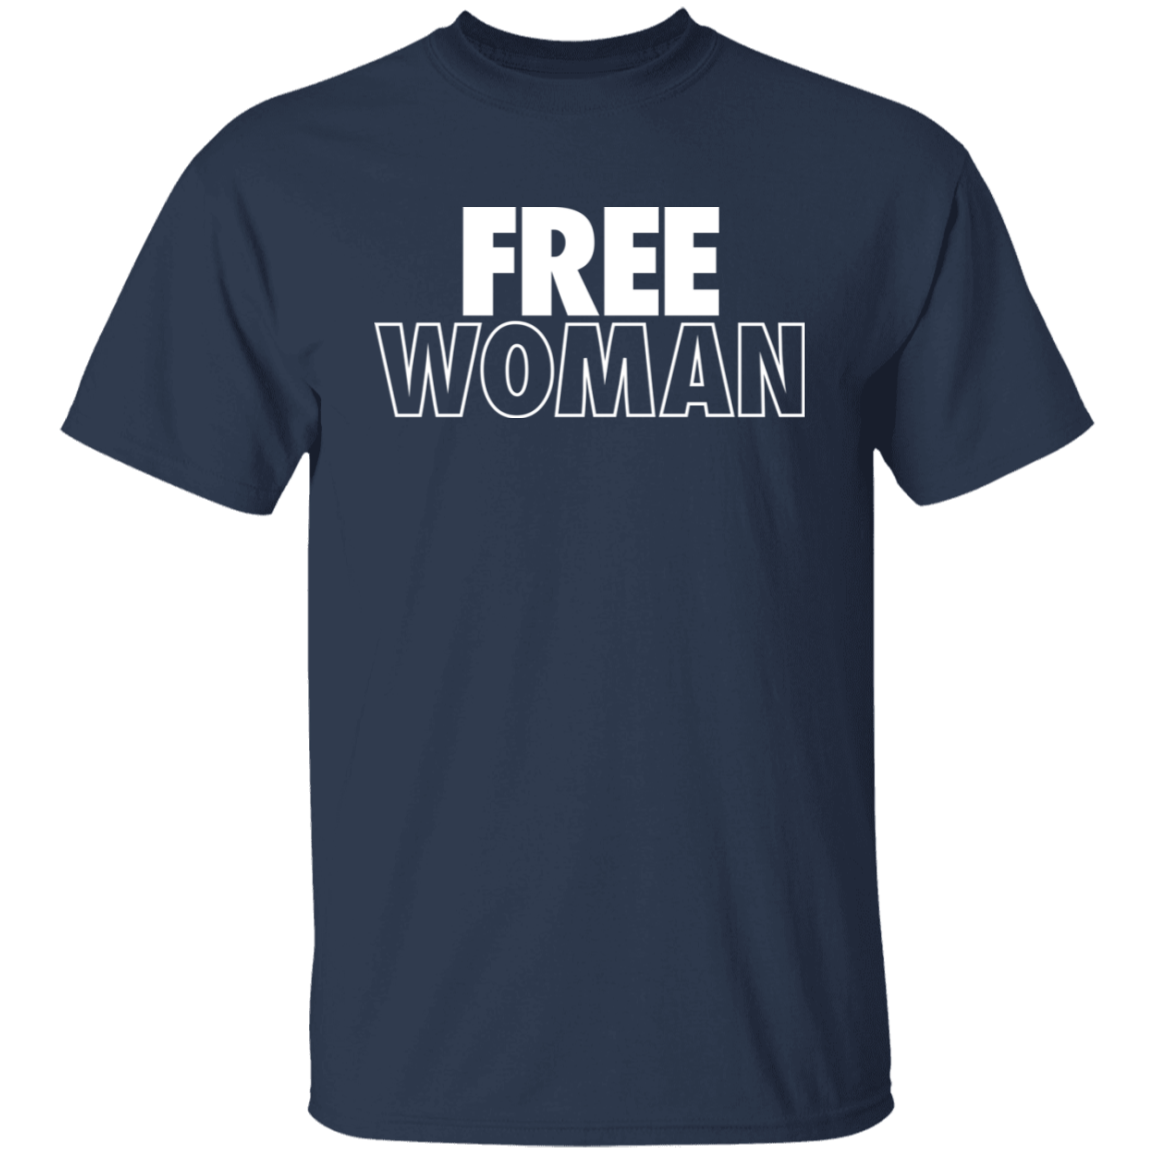 Free Women